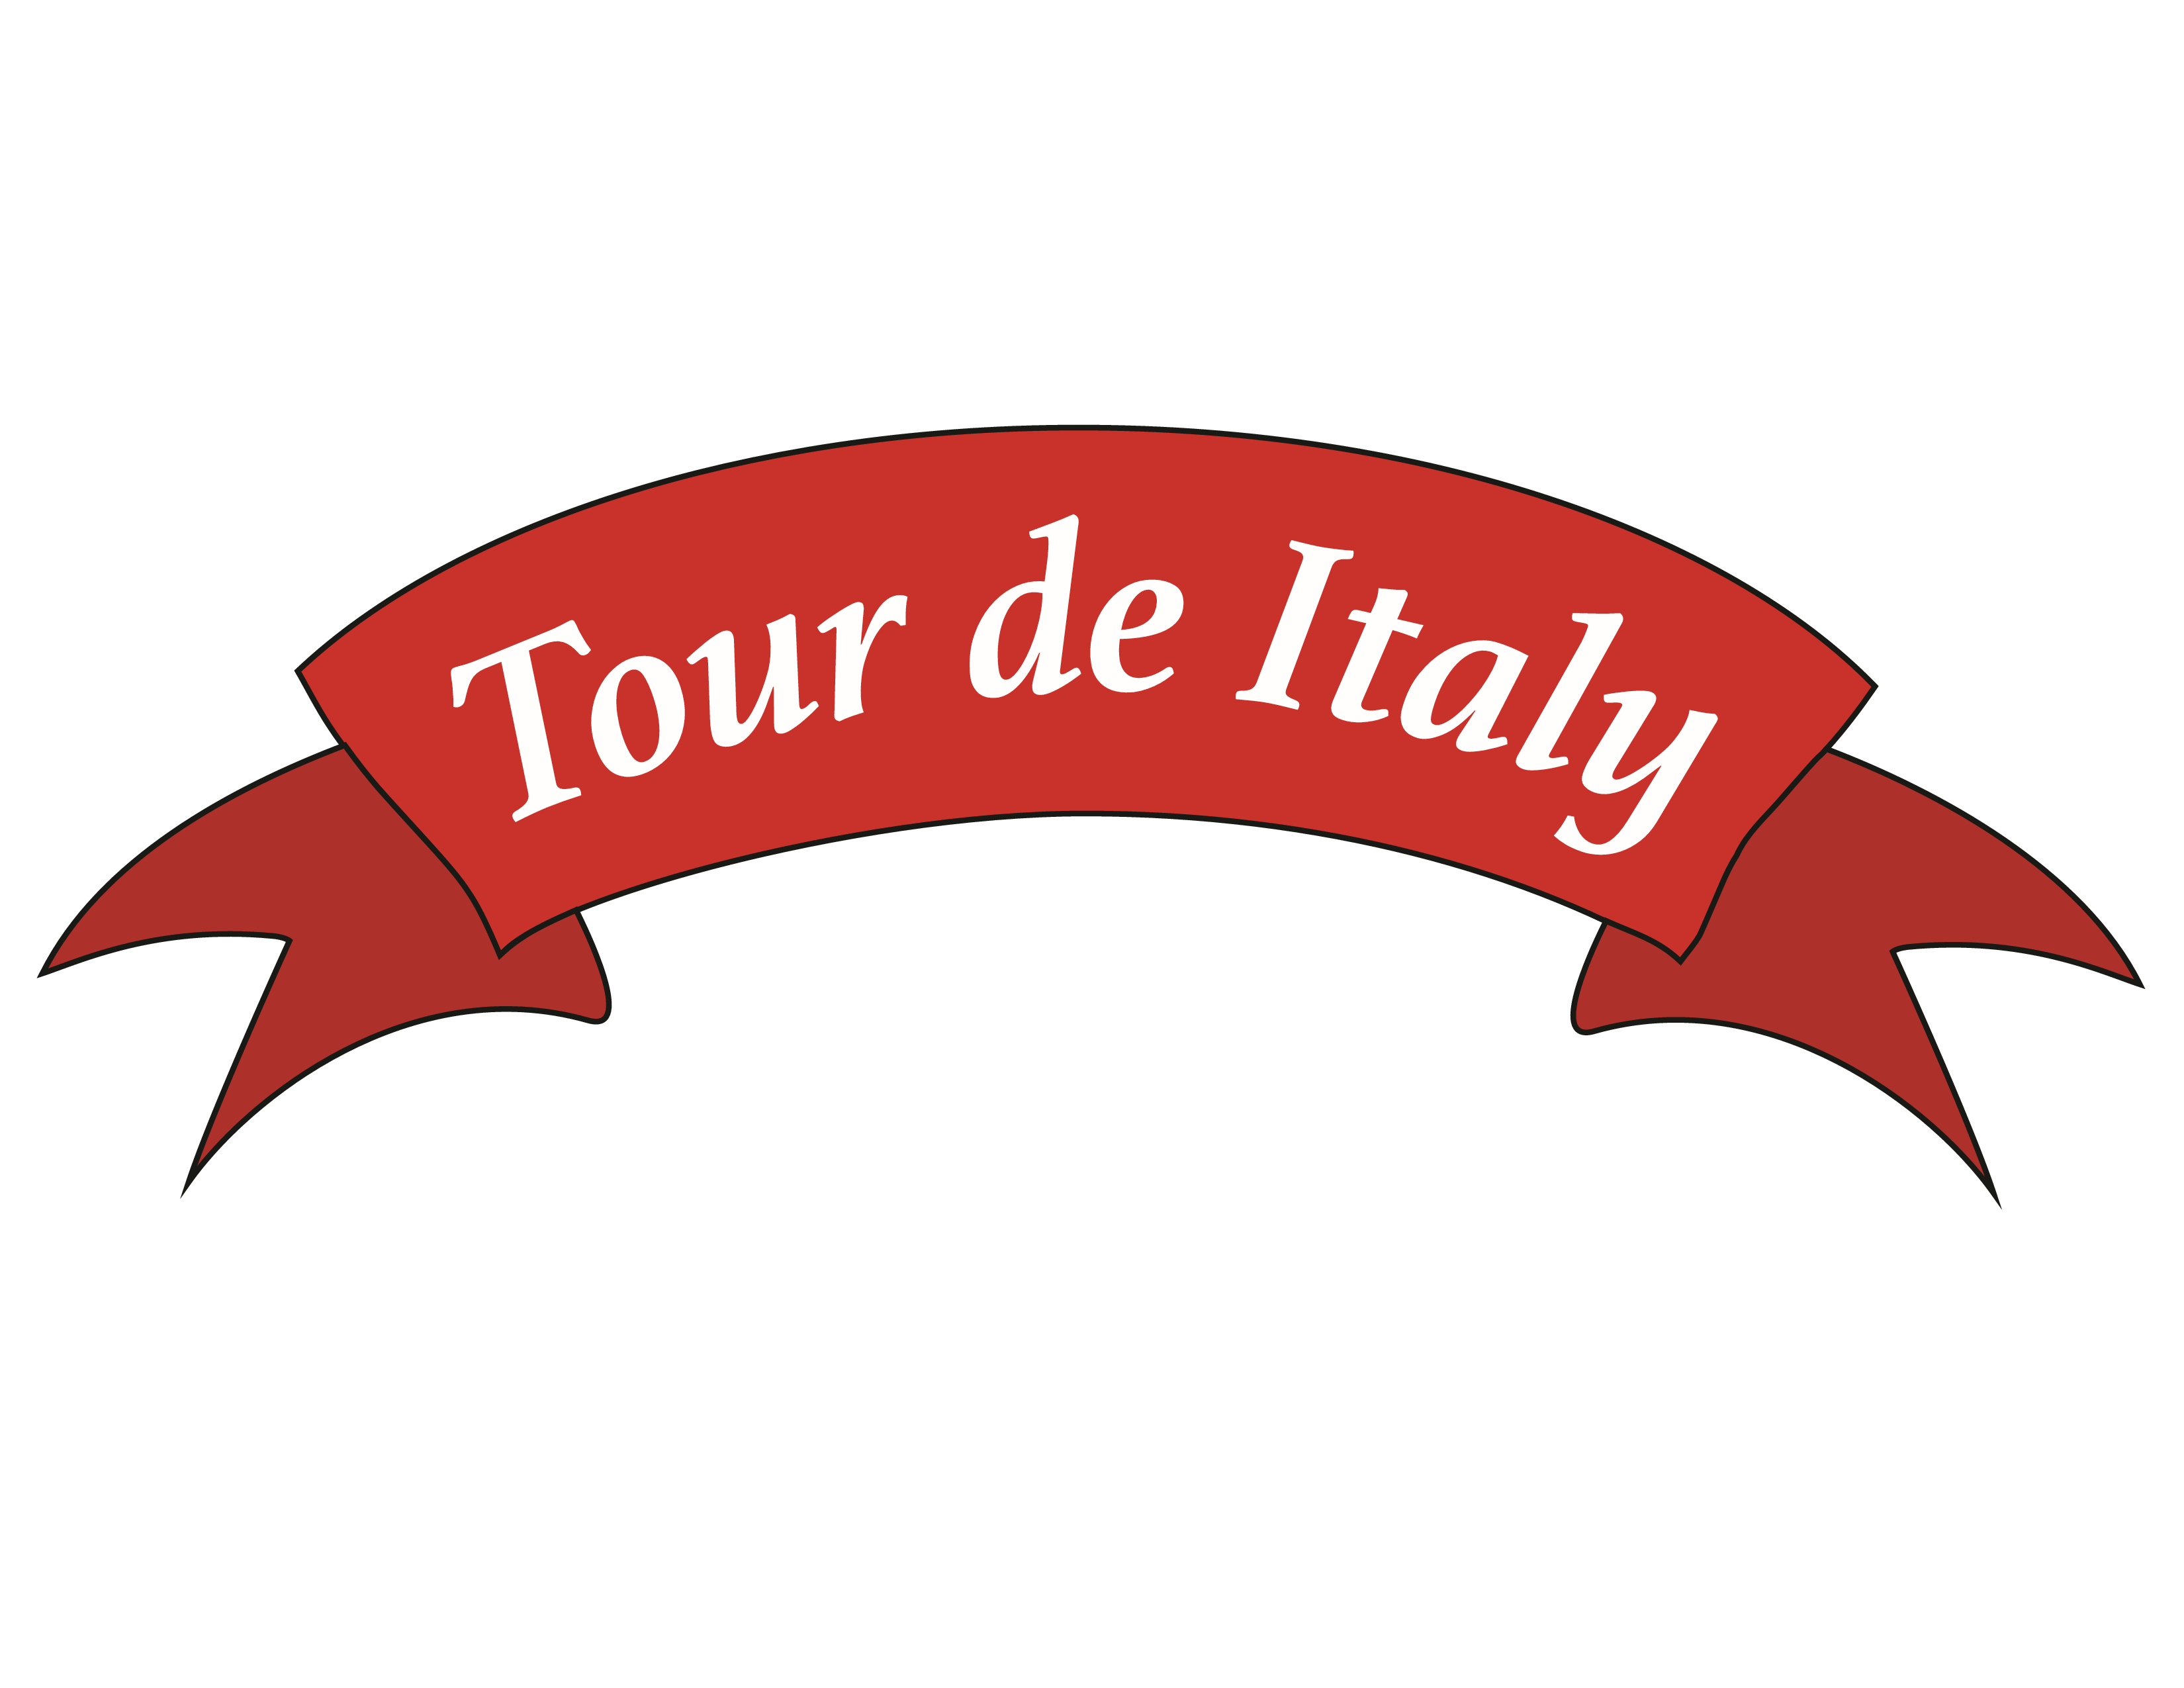 Tour de Italy - New Ownership